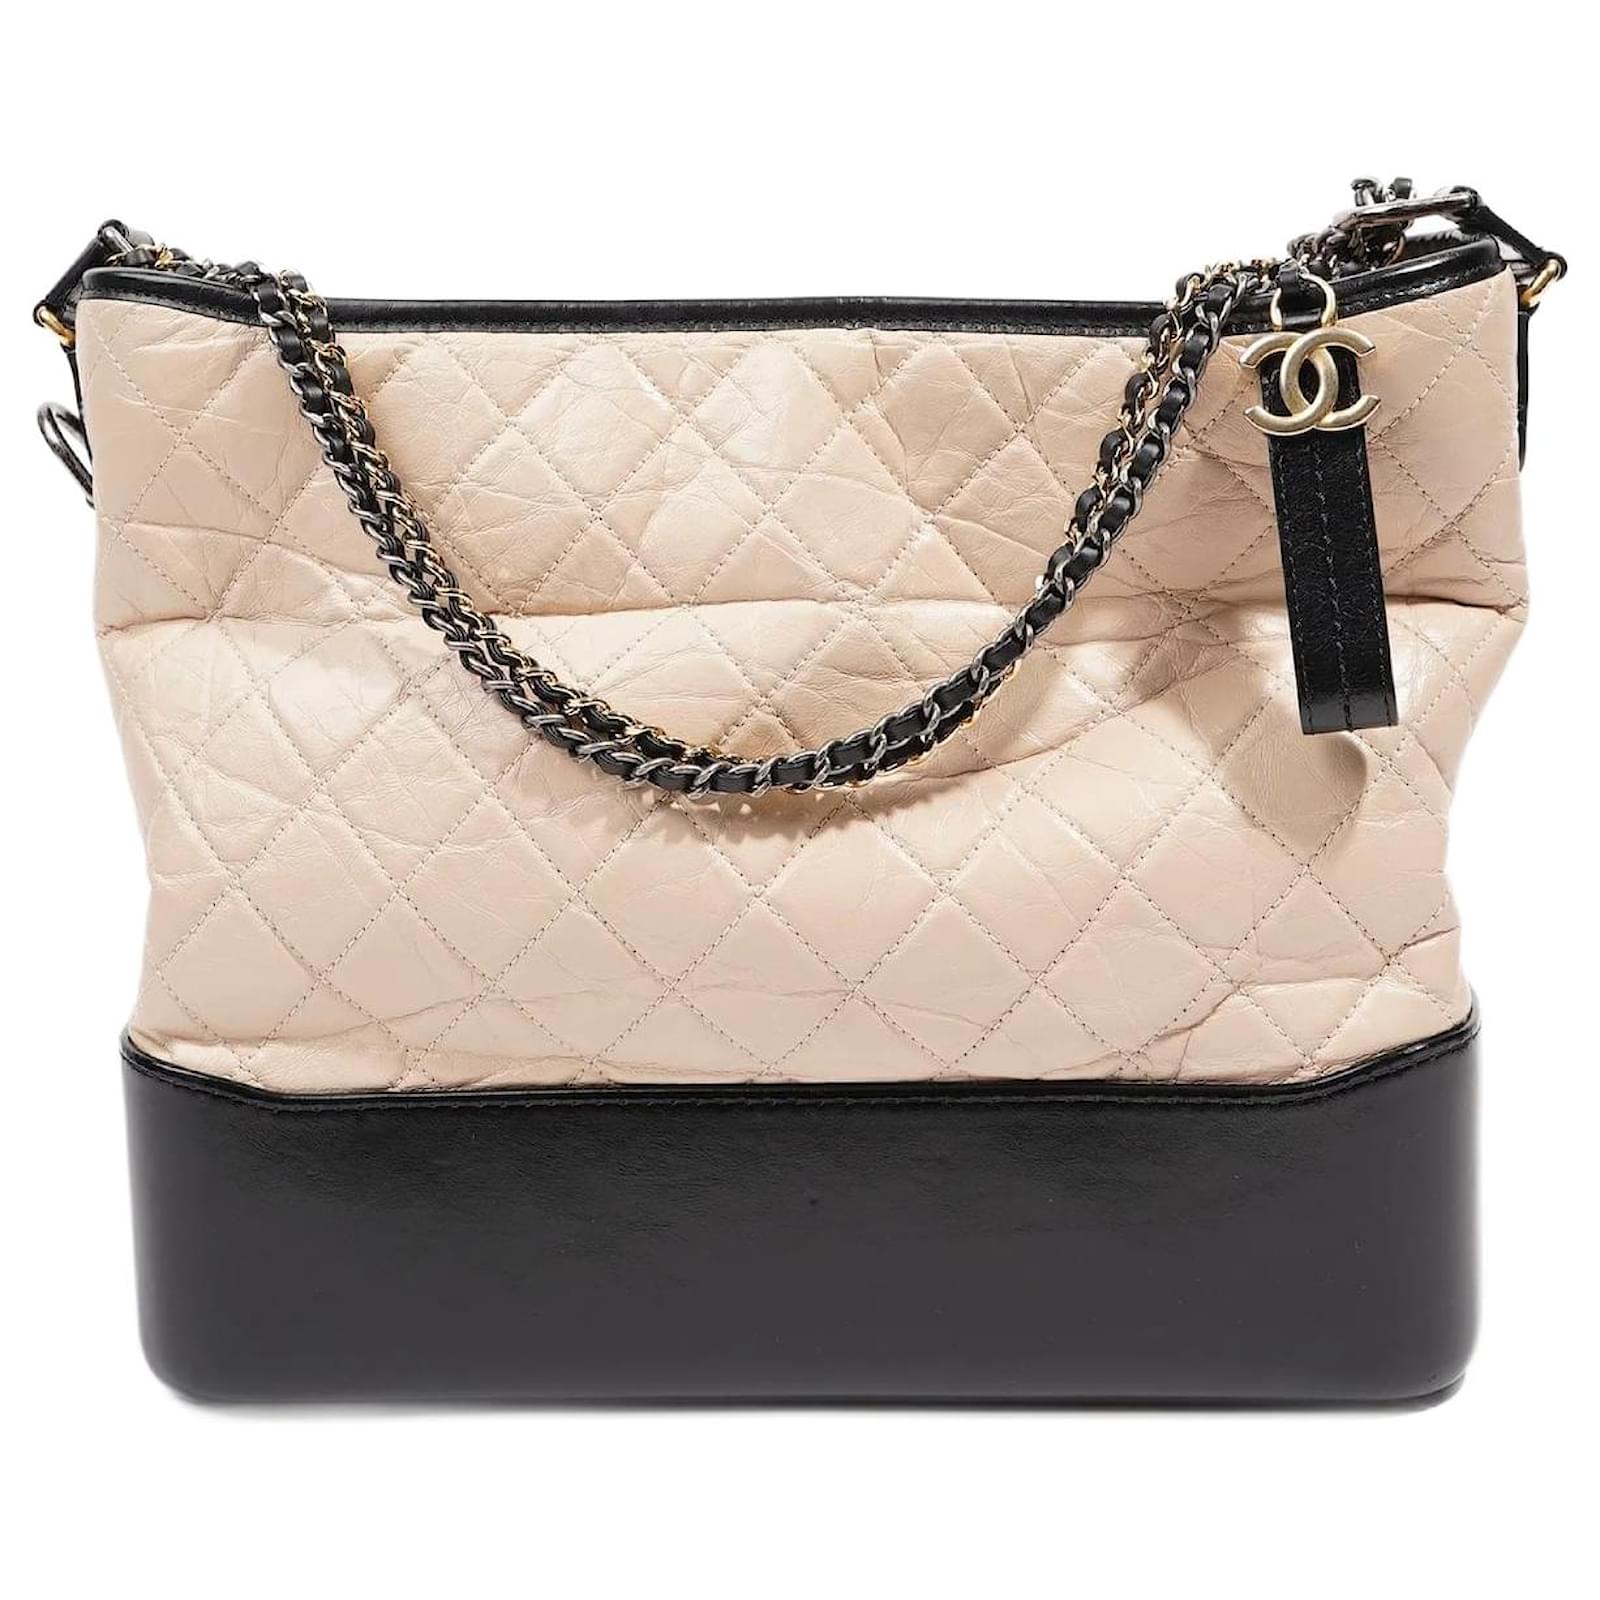 Chanel Large Gabrielle Bag